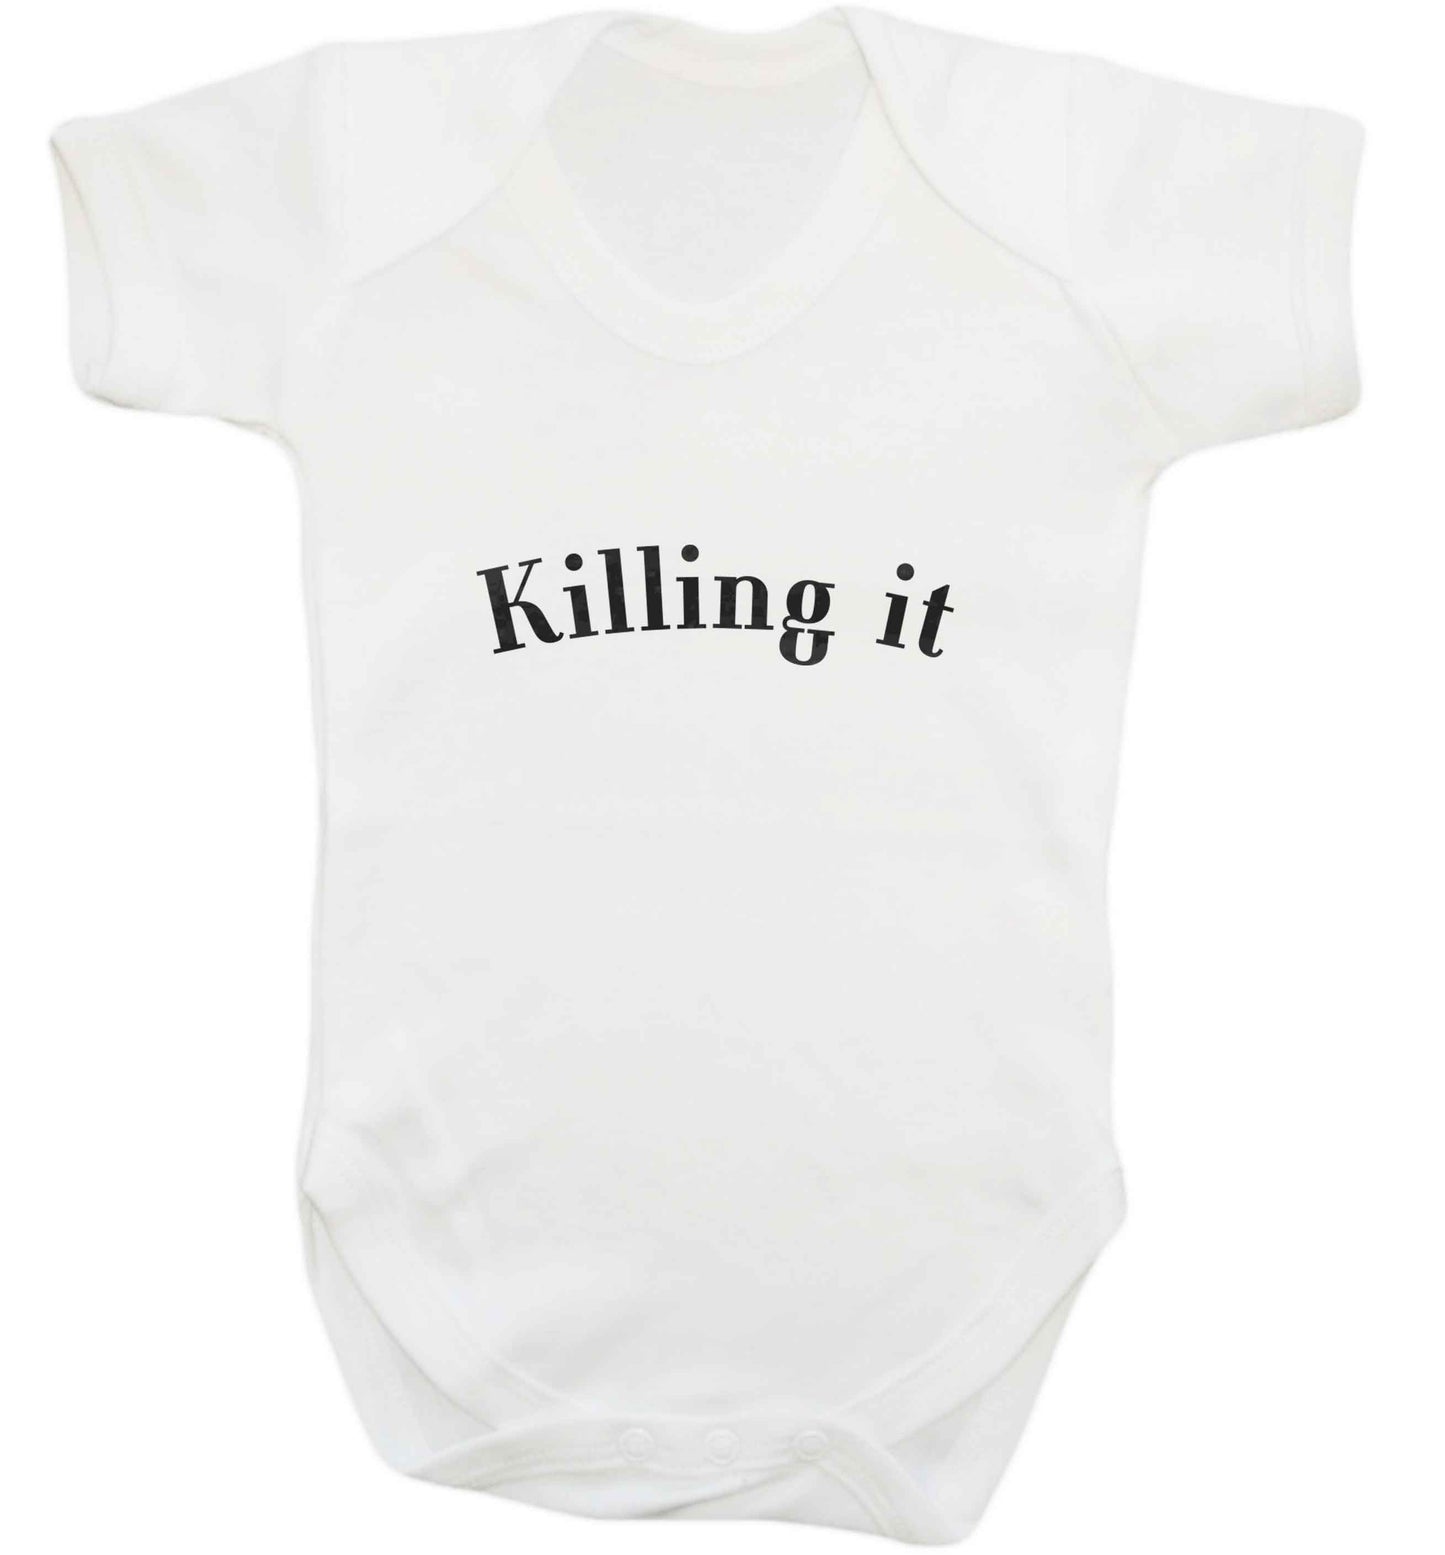 Killing it baby vest white 18-24 months